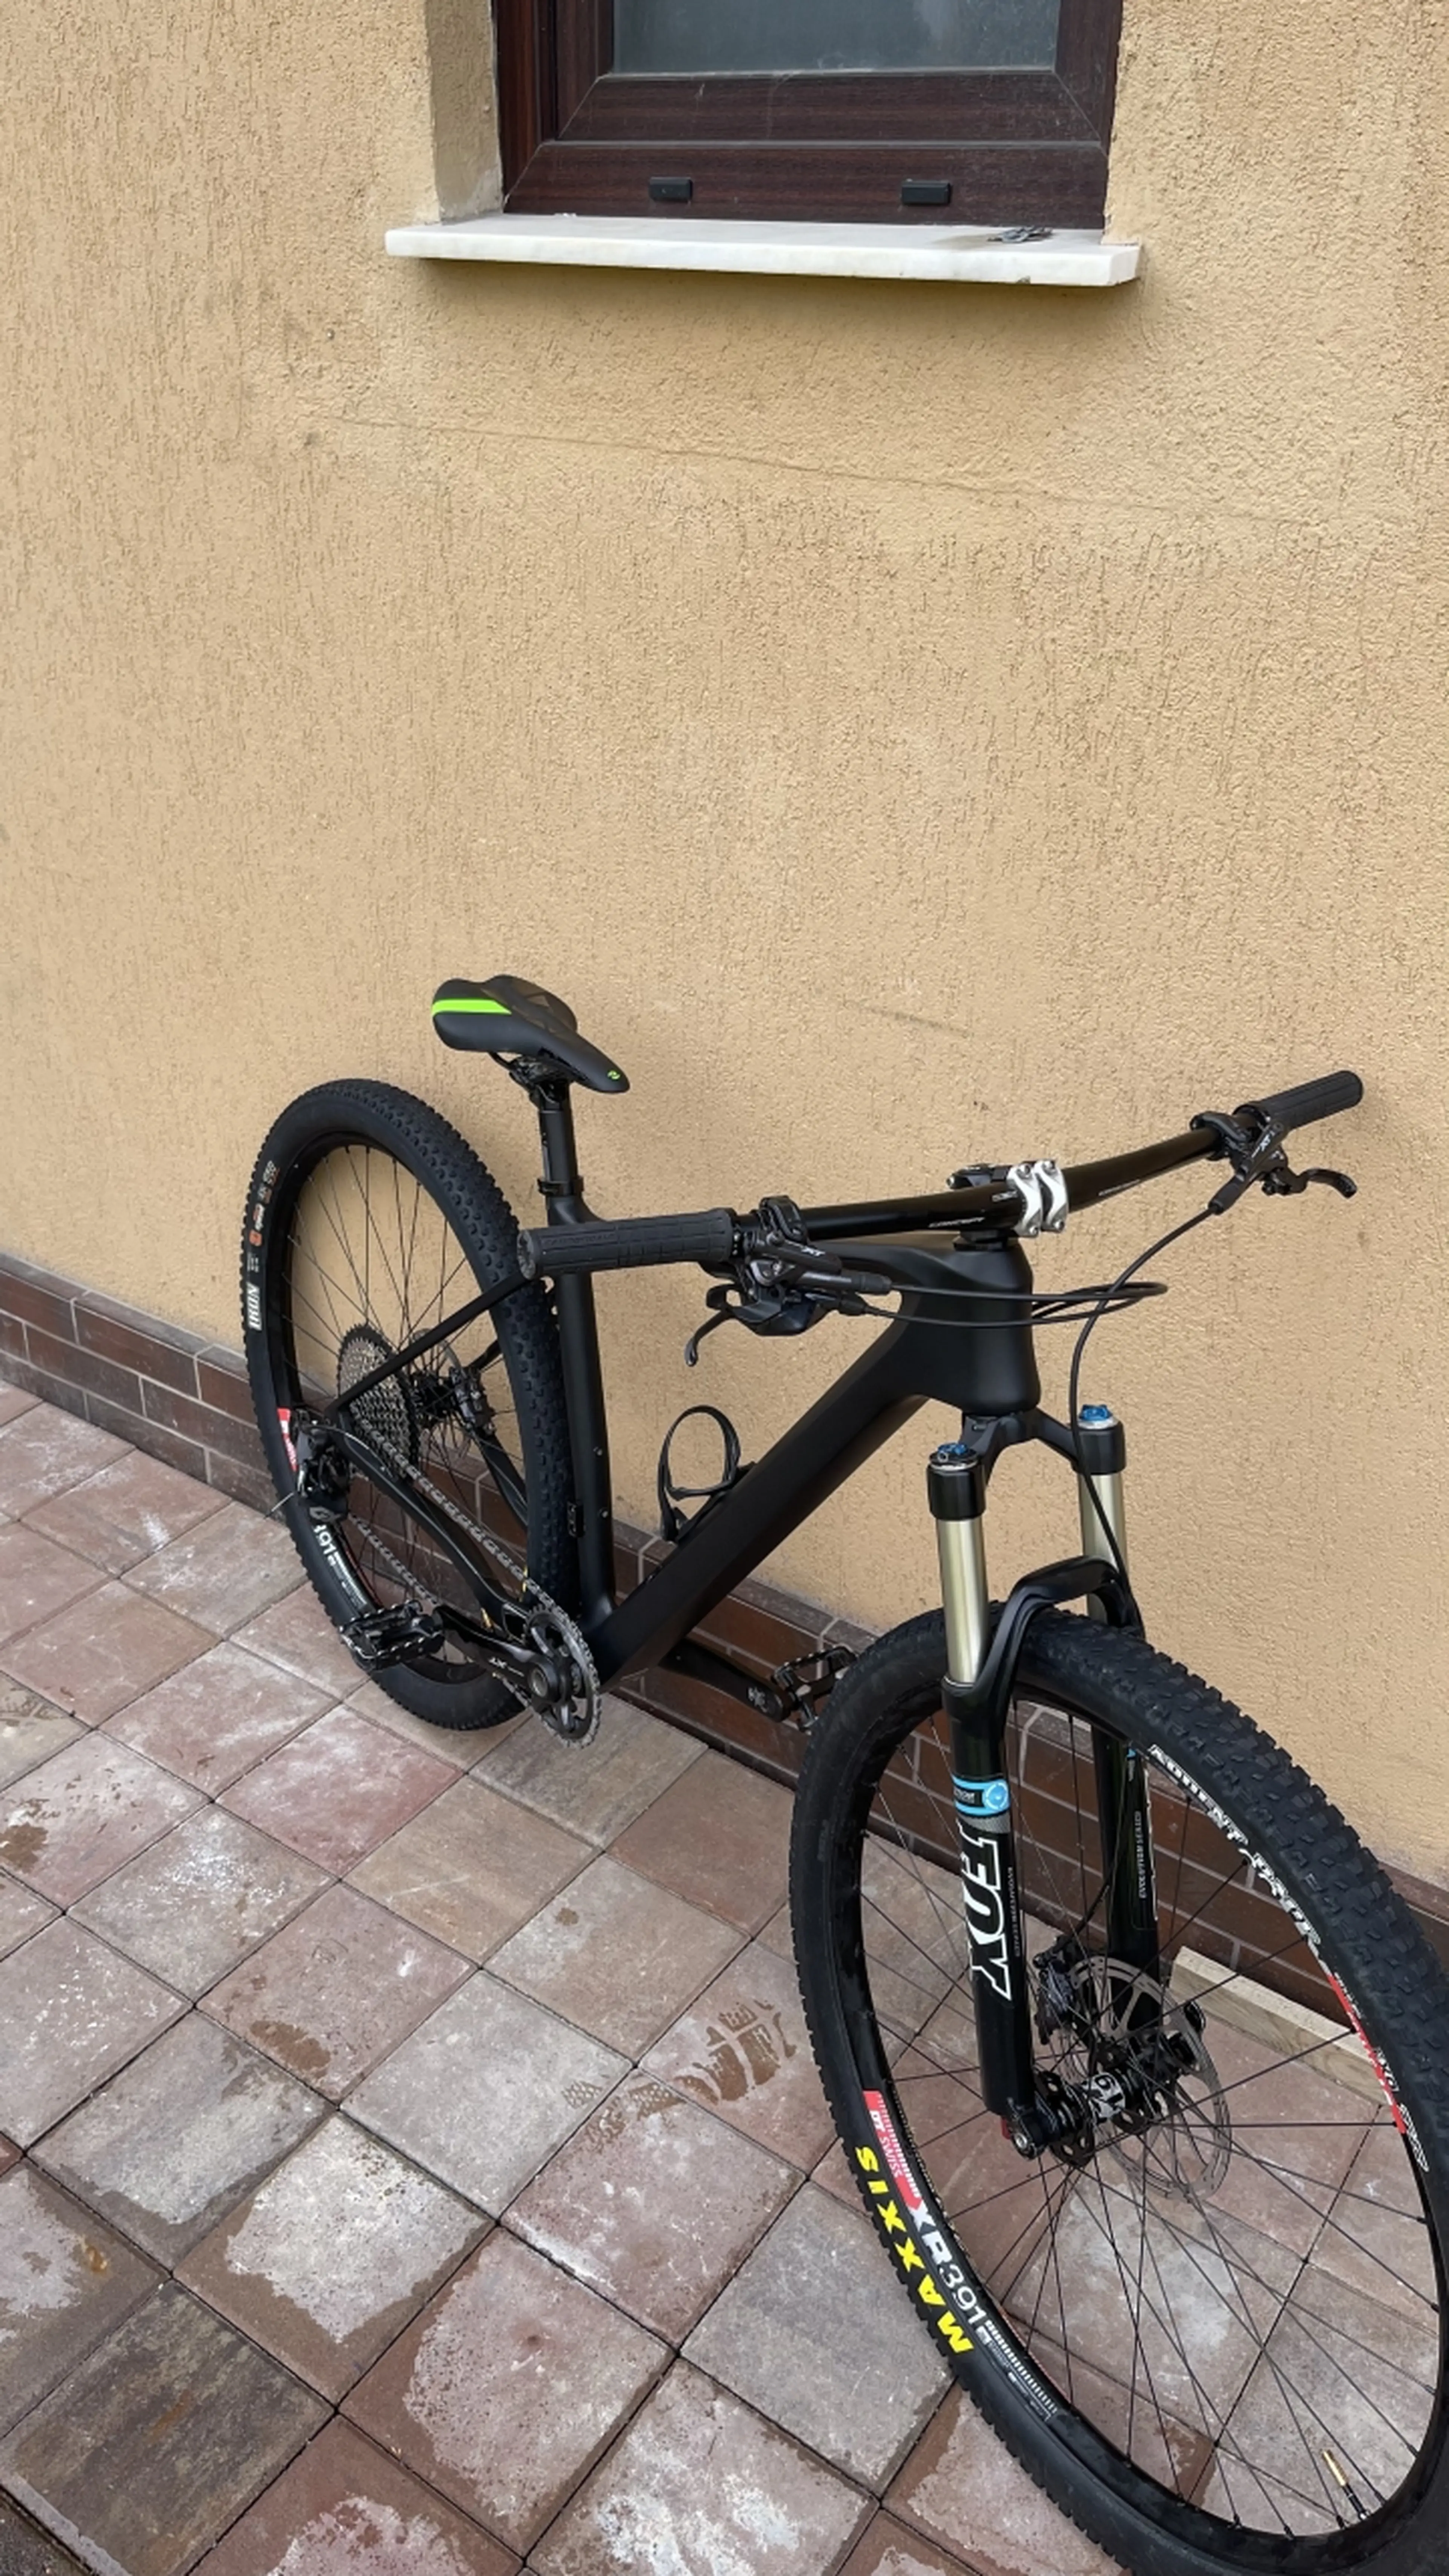 3. Bicicleta XC Custom 1x12 / Carbon / Fox / L /9.5kg